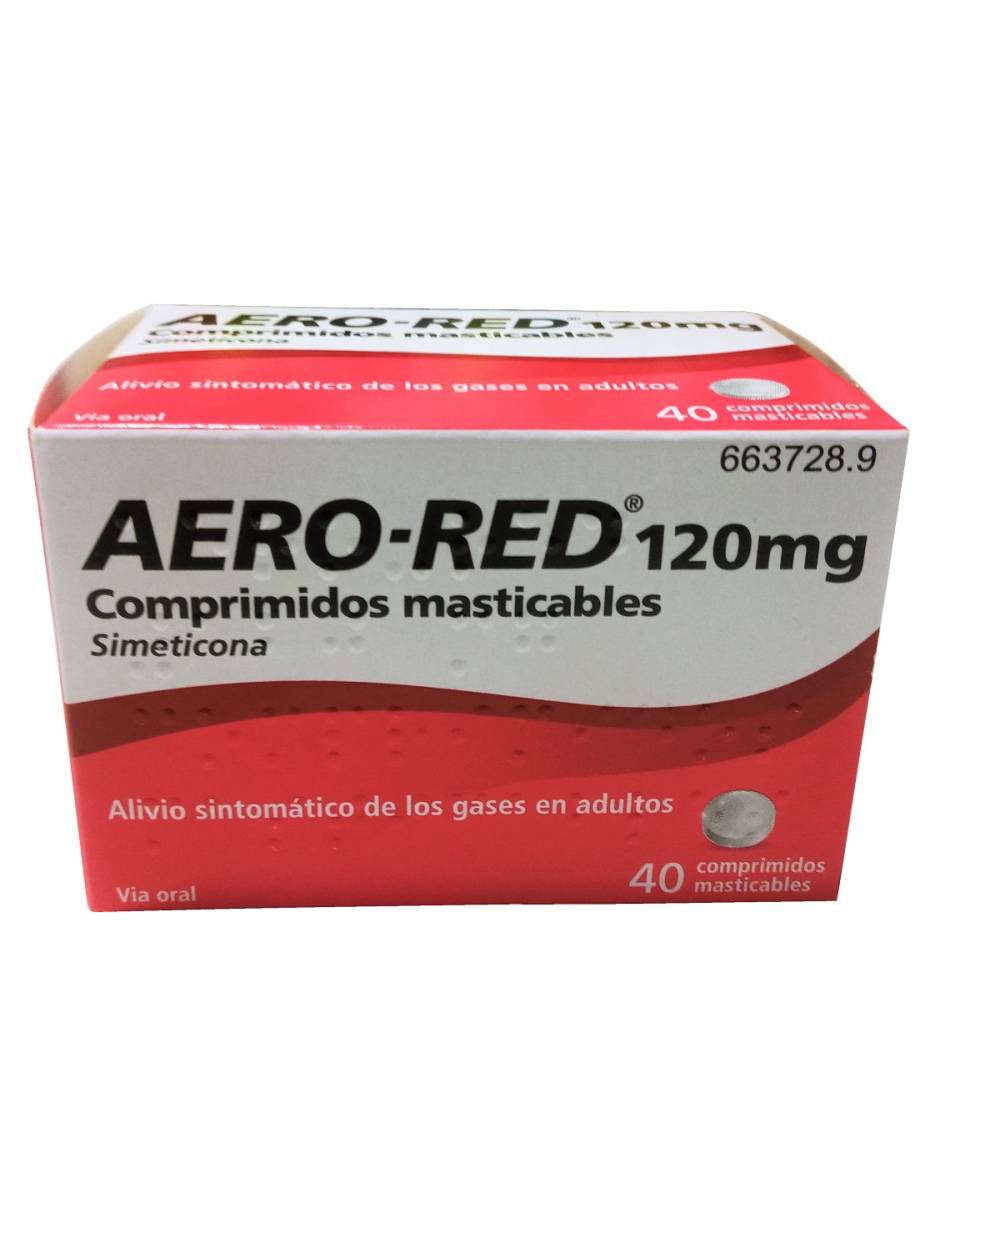 Aero-red - 120 mg - 40 comprimidos masticables